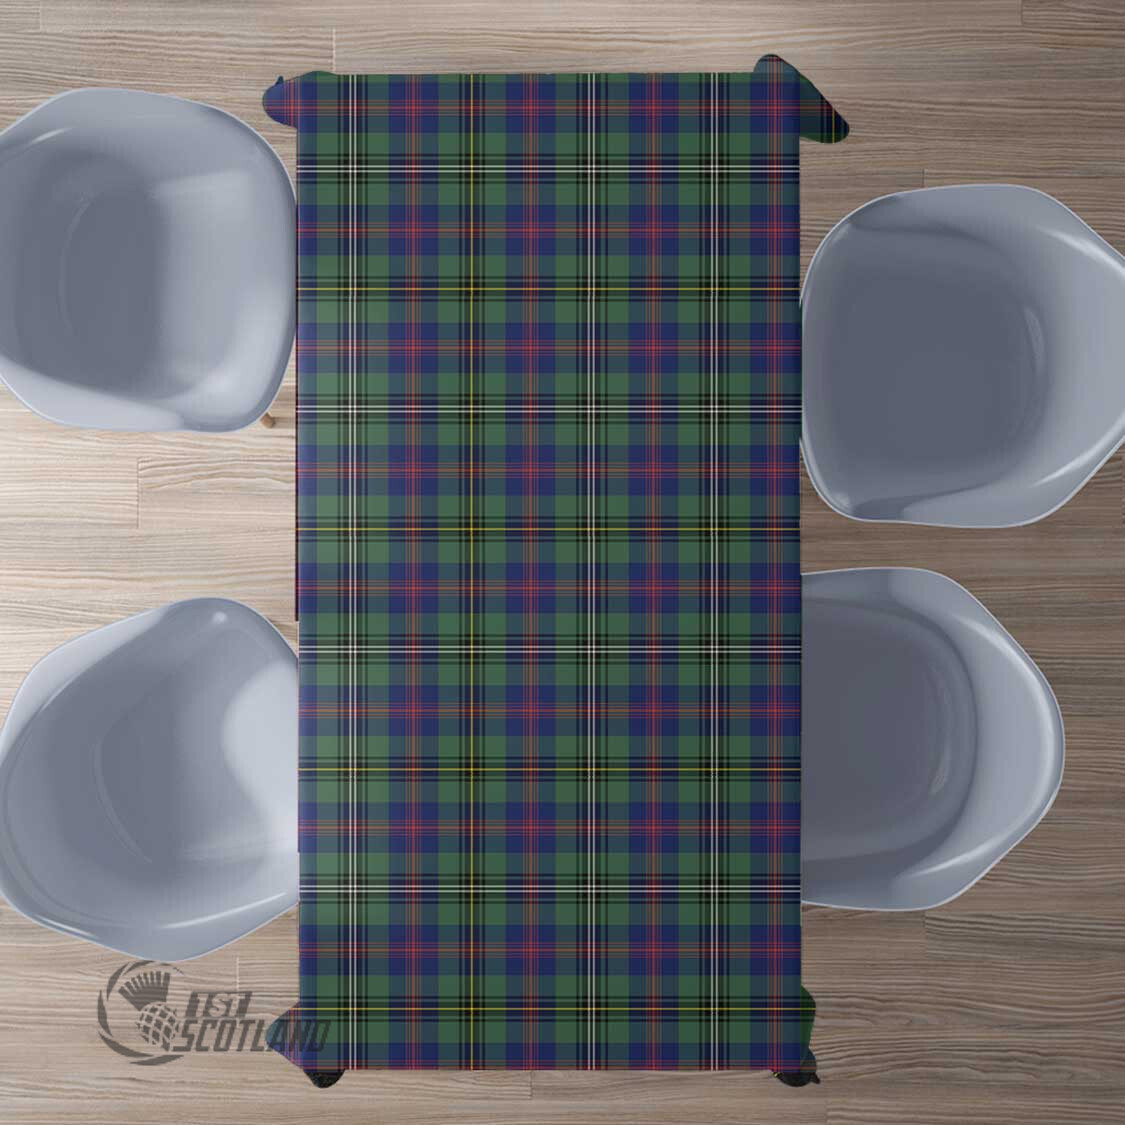 Scottish Wood Modern Tartan Rectangle Tablecloth Full Plaid